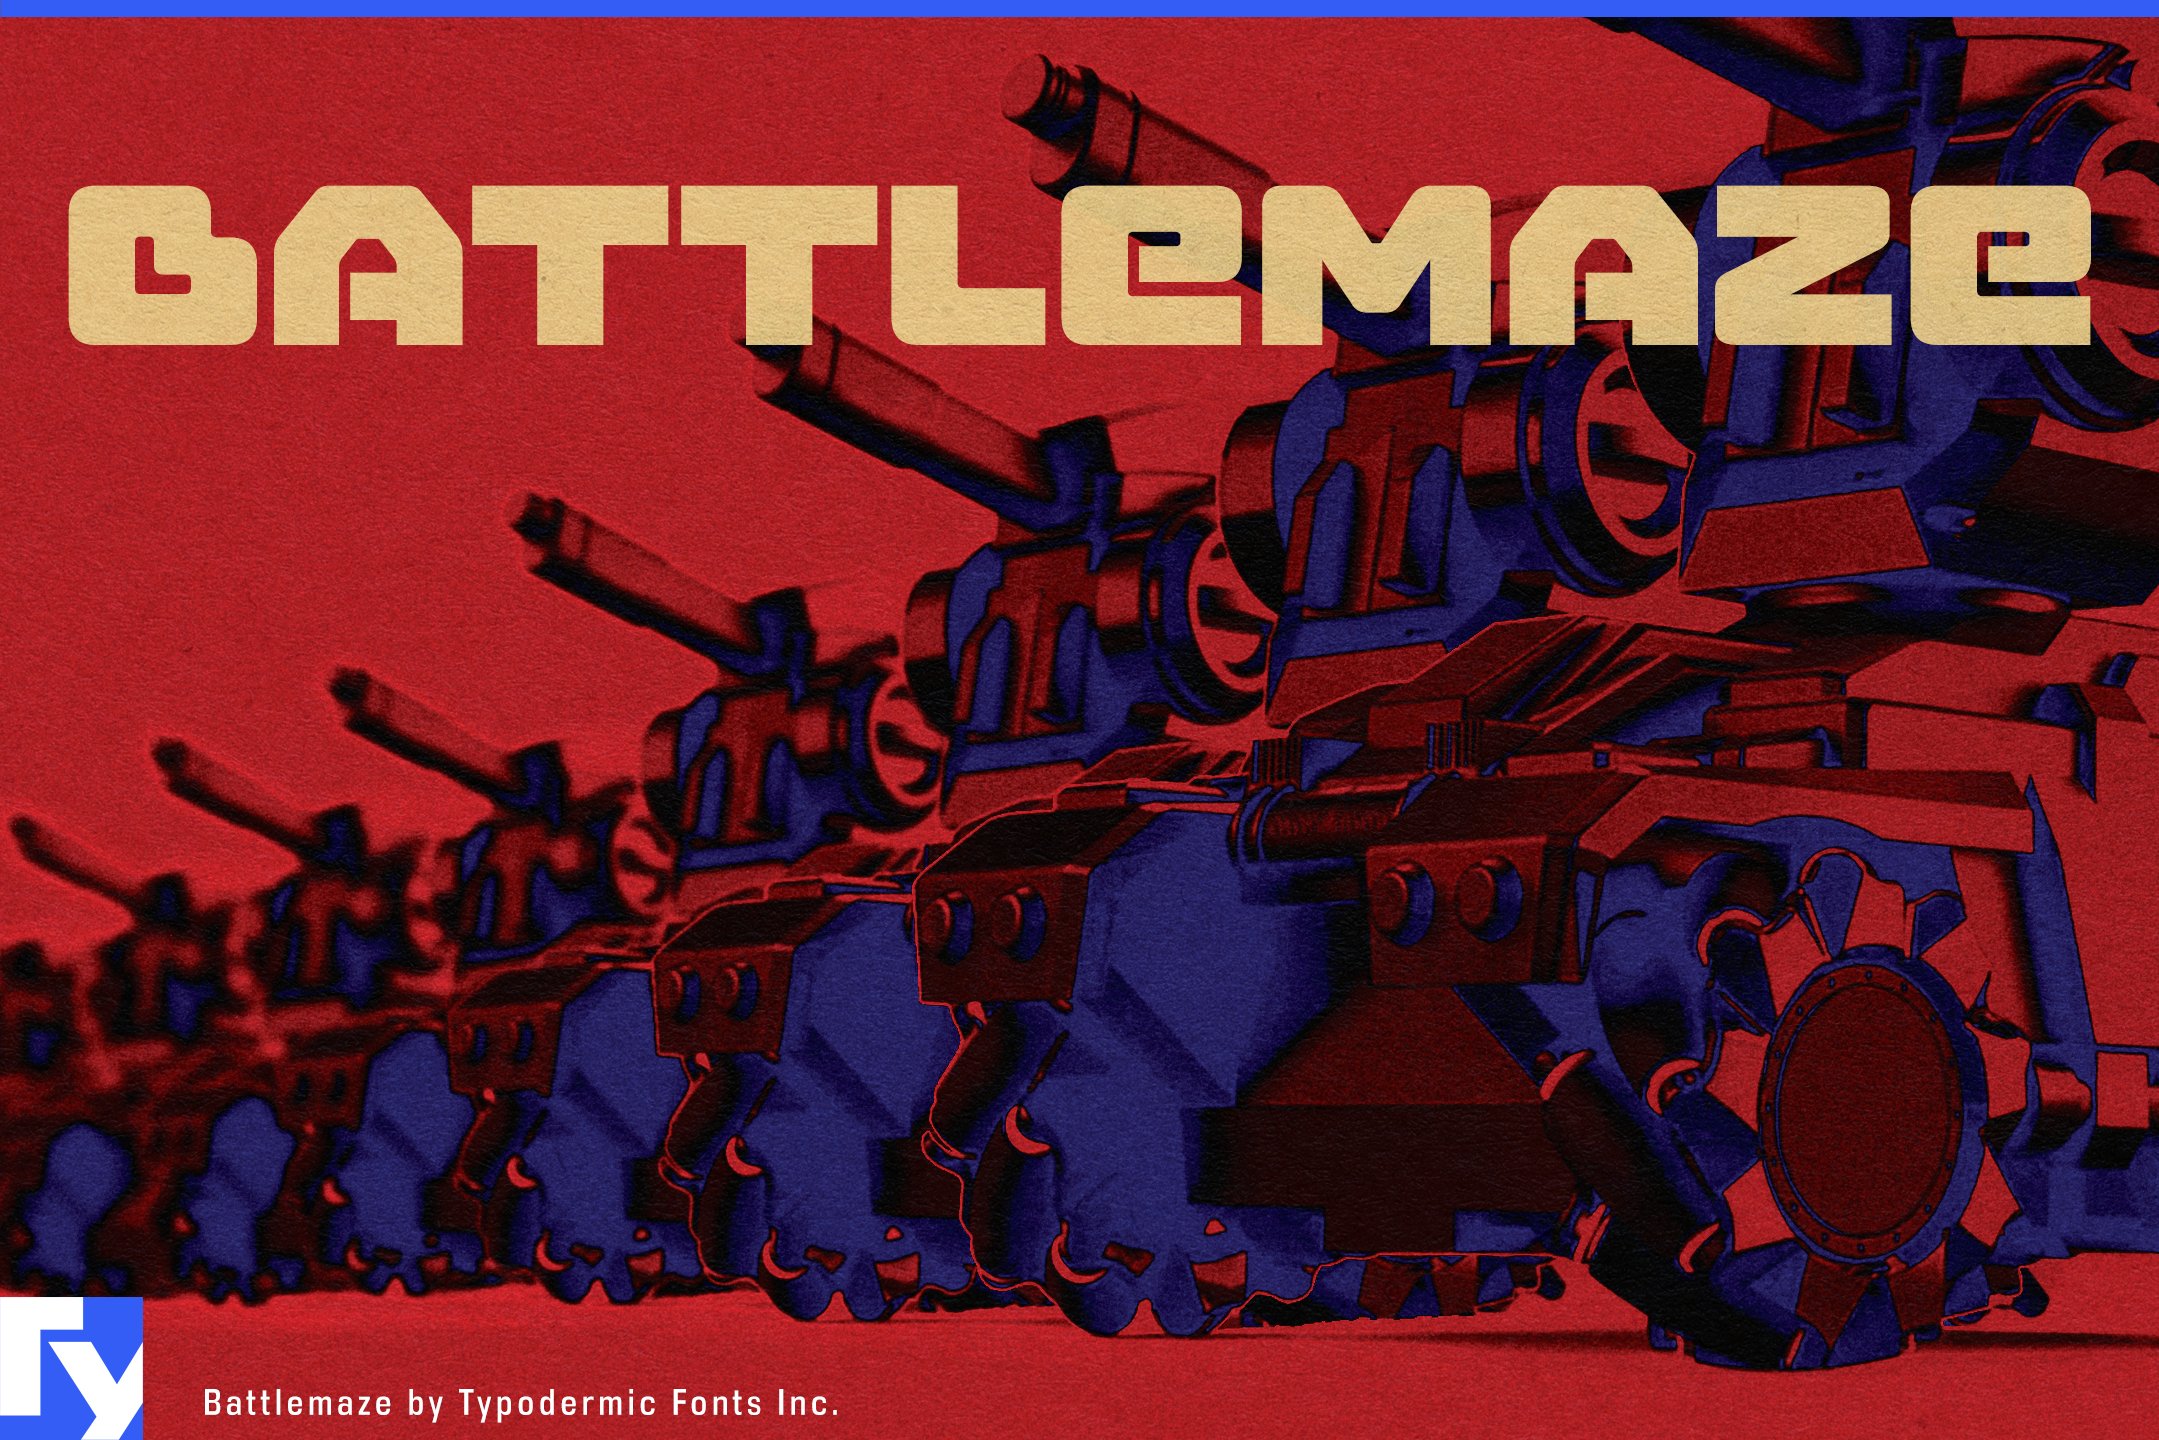 Battlemaze cover image.